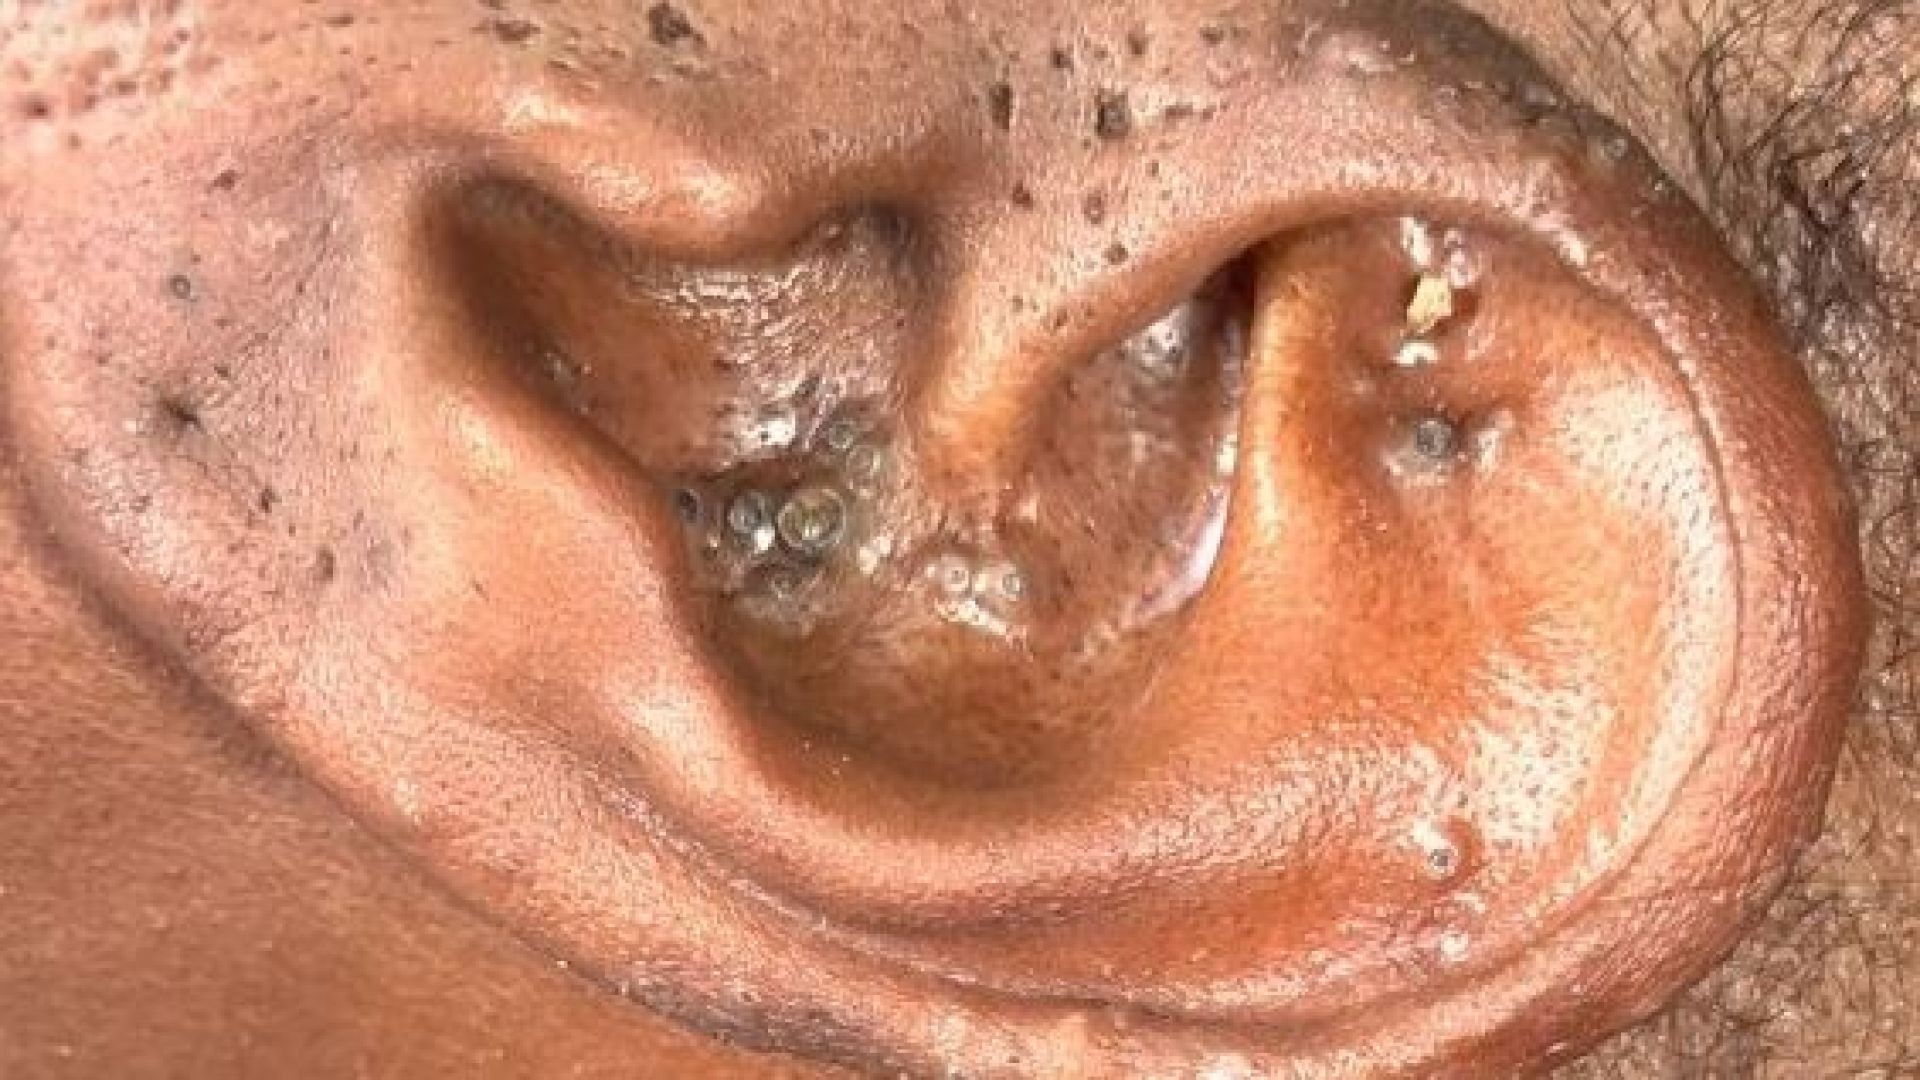 Huge blackheads inside the ear